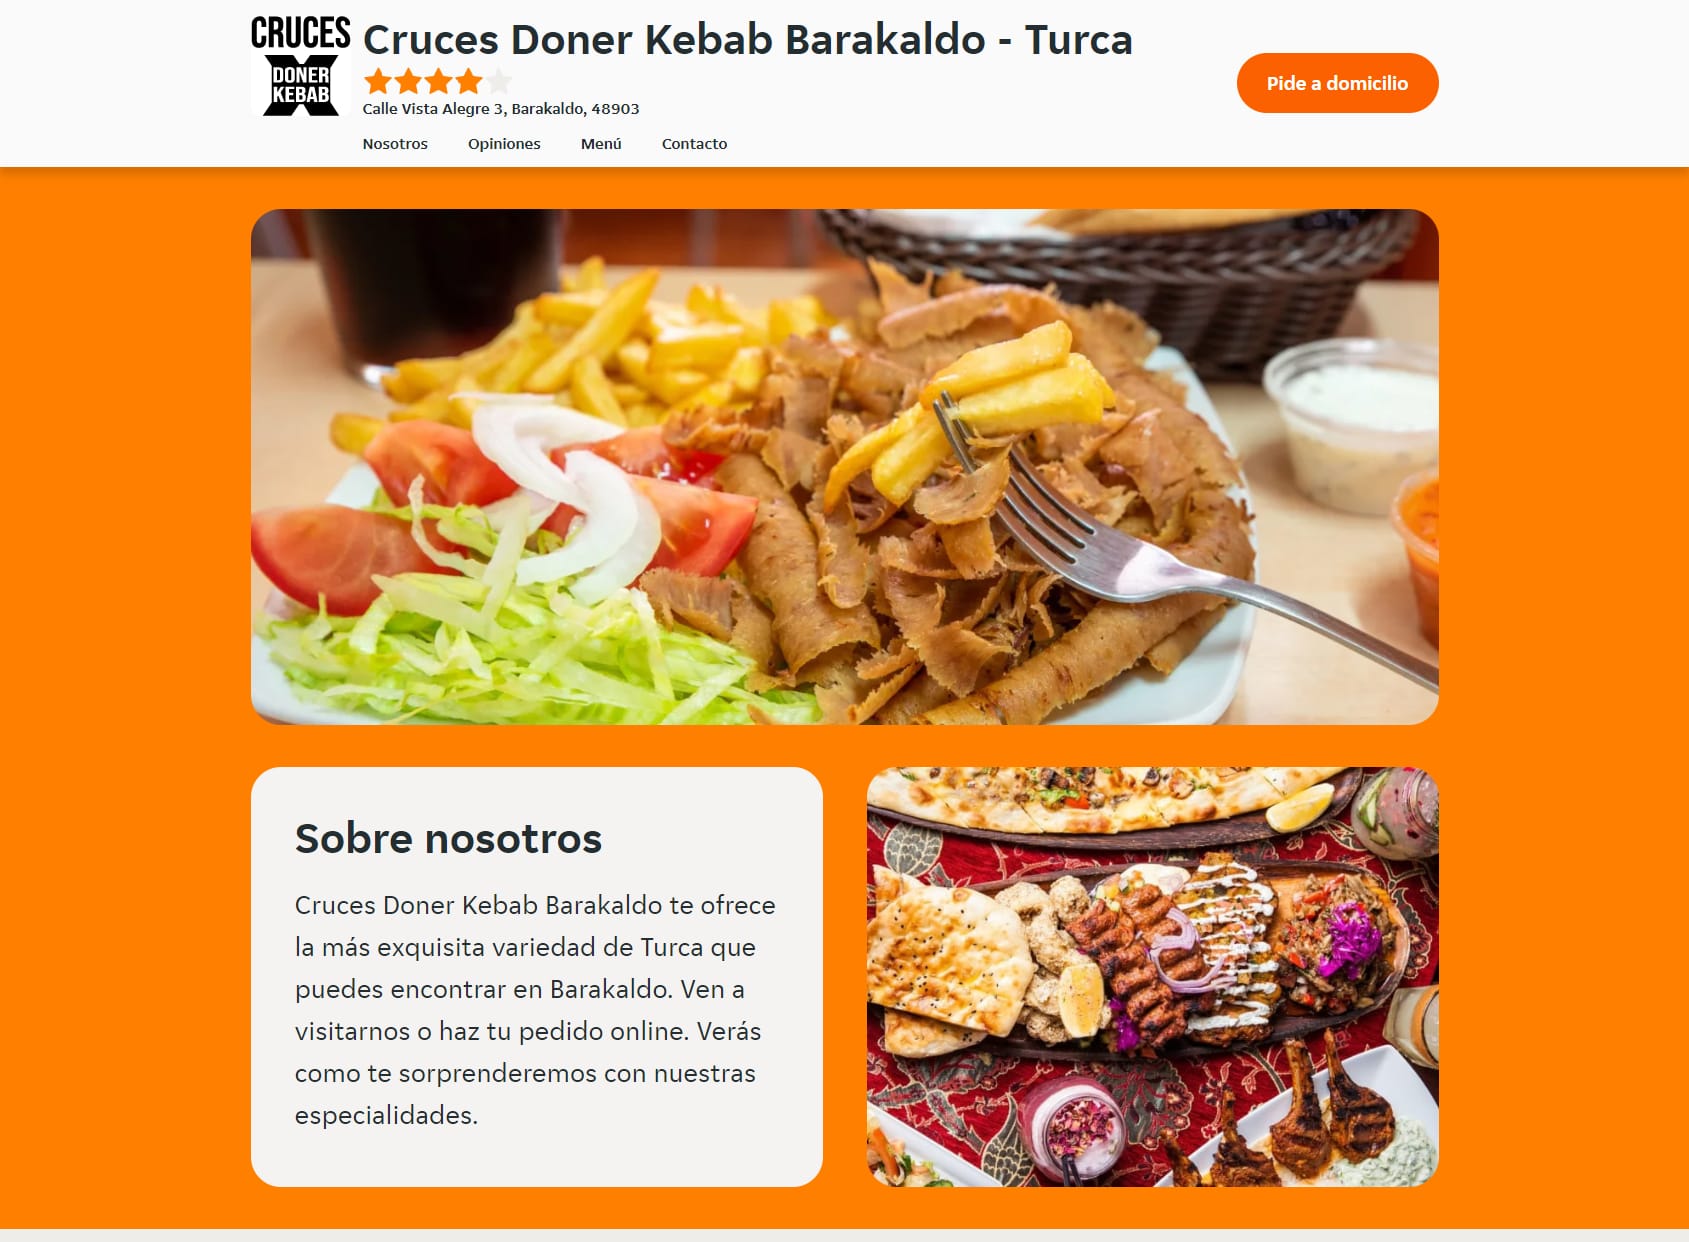 New Cruces Doner Kebab